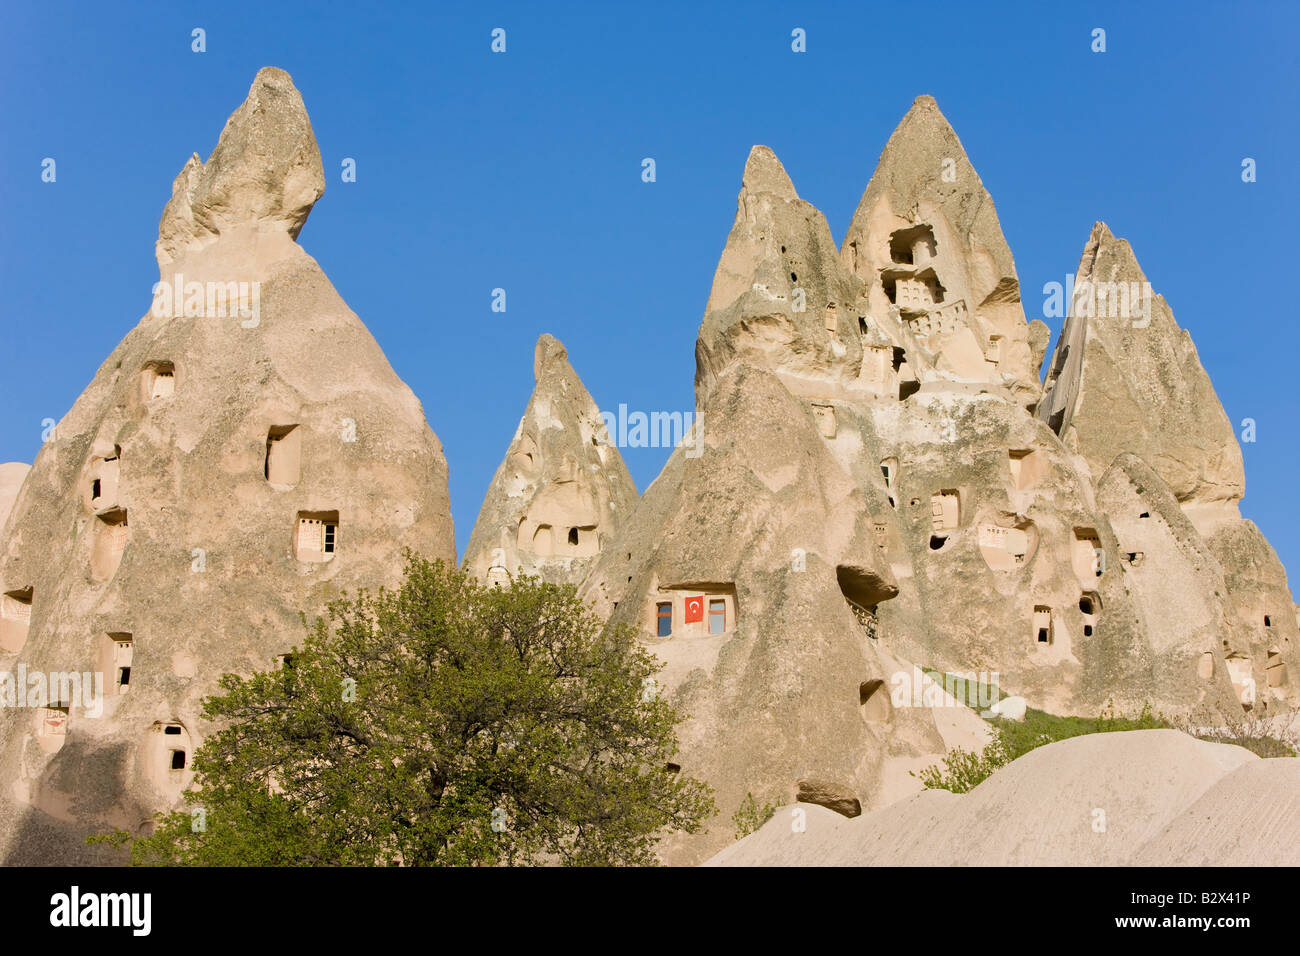 Old troglodytic cave dwellings and the rock Castle of Uchisar, Cappadocia, Anatolia, Turkey, Asia Minor, Eurasia Stock Photo